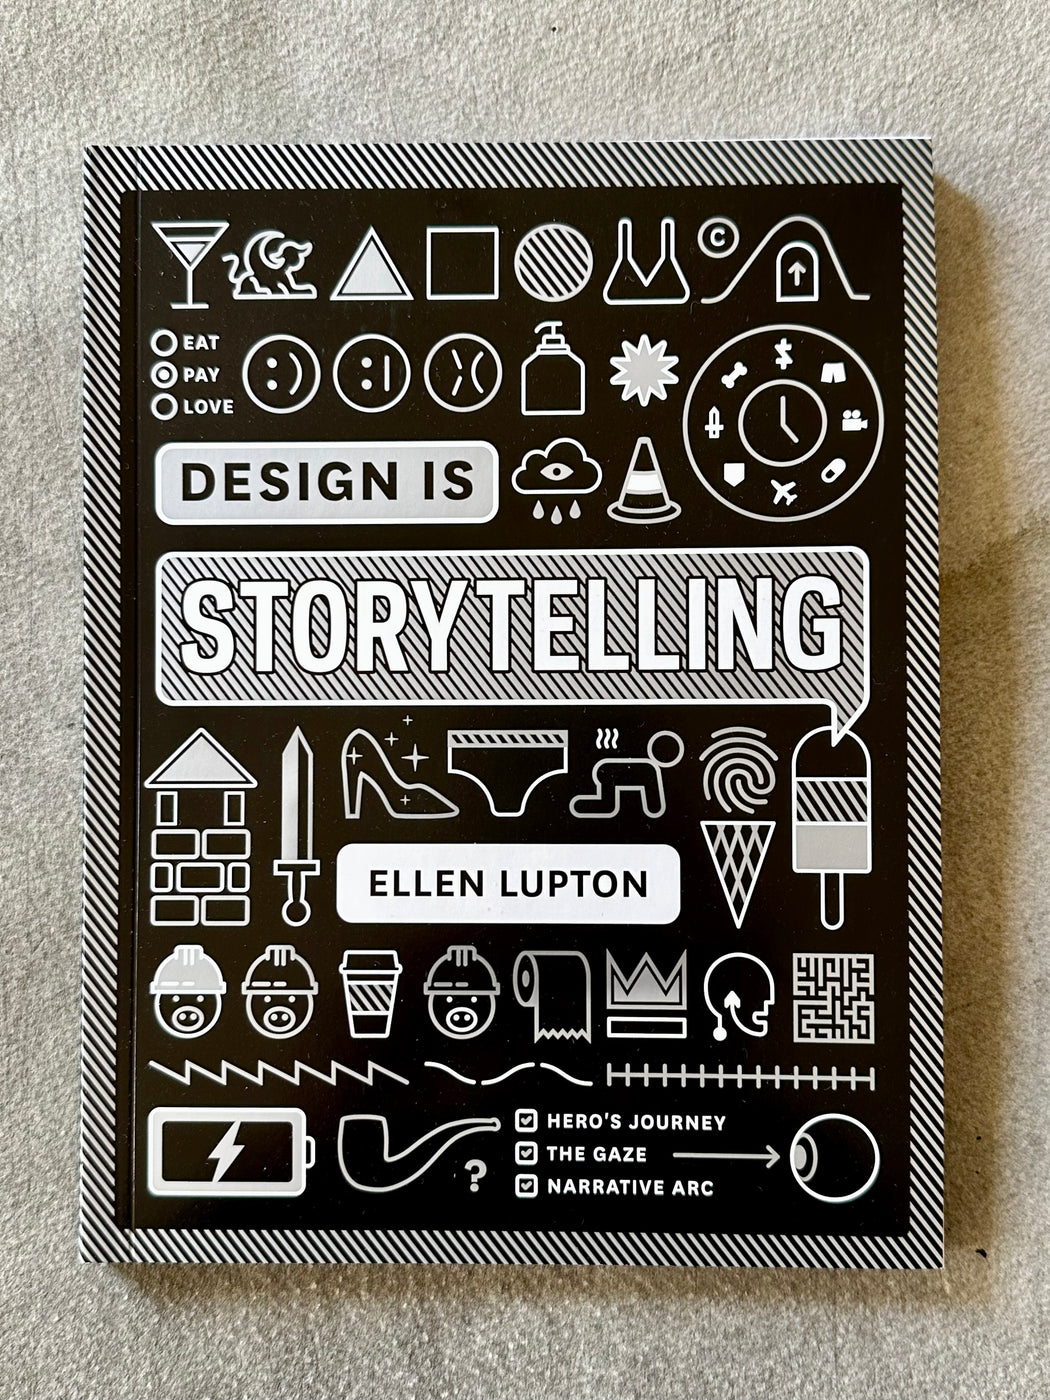 "Design Is Storytelling" by Ellen Lupton